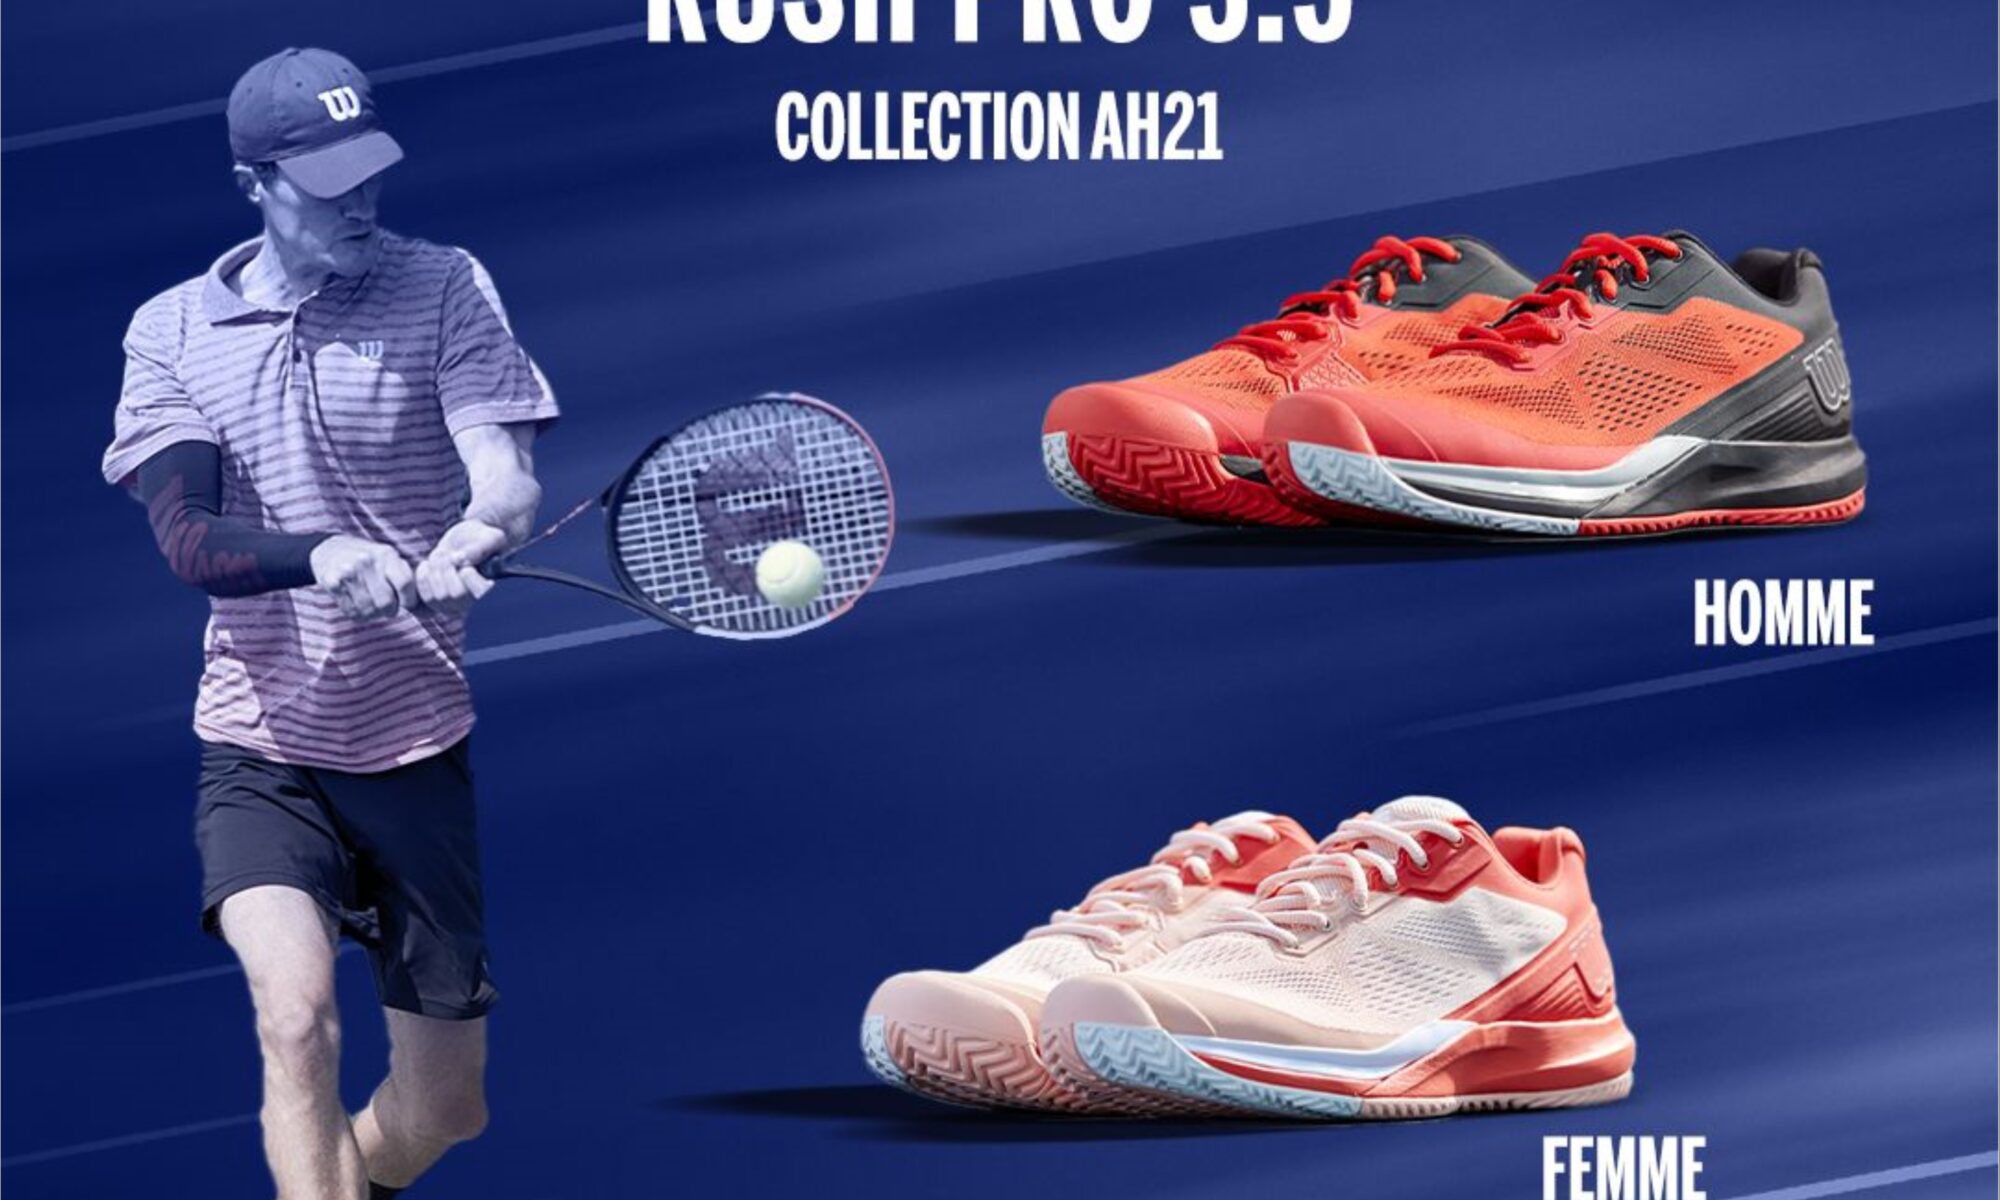 Chaussure tennis homme : Chaussures de tennis hommes - Protennis